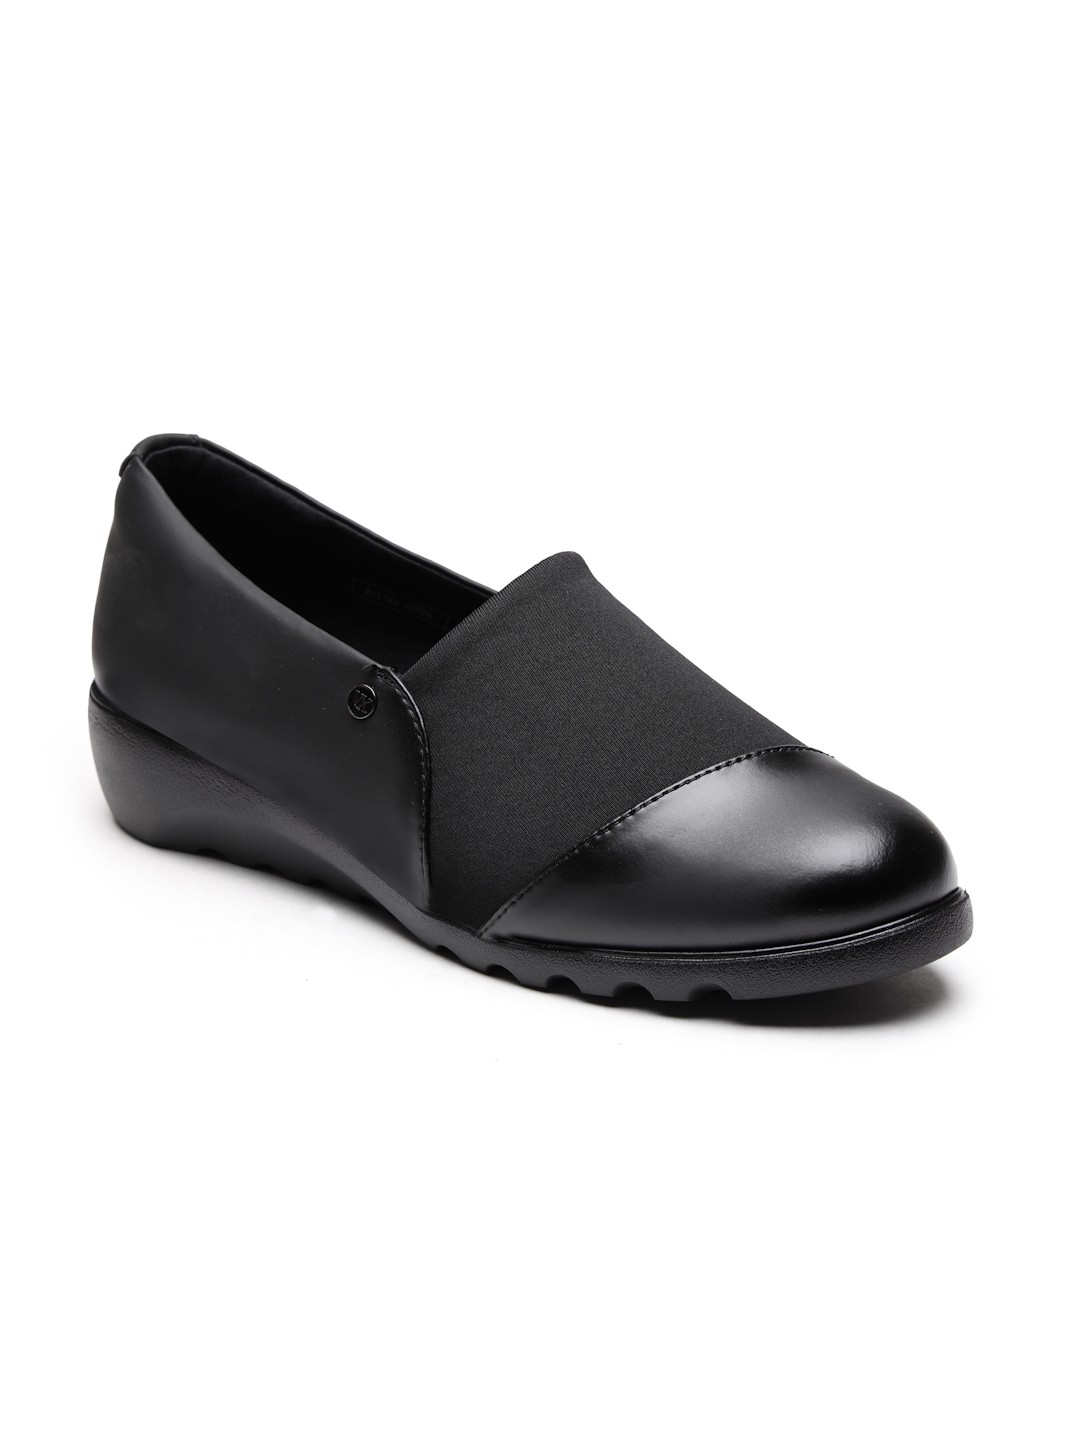 Buy Von Wellx Germany Comfort Women's Black Casual Shoes Ayla Online in Kozhikode